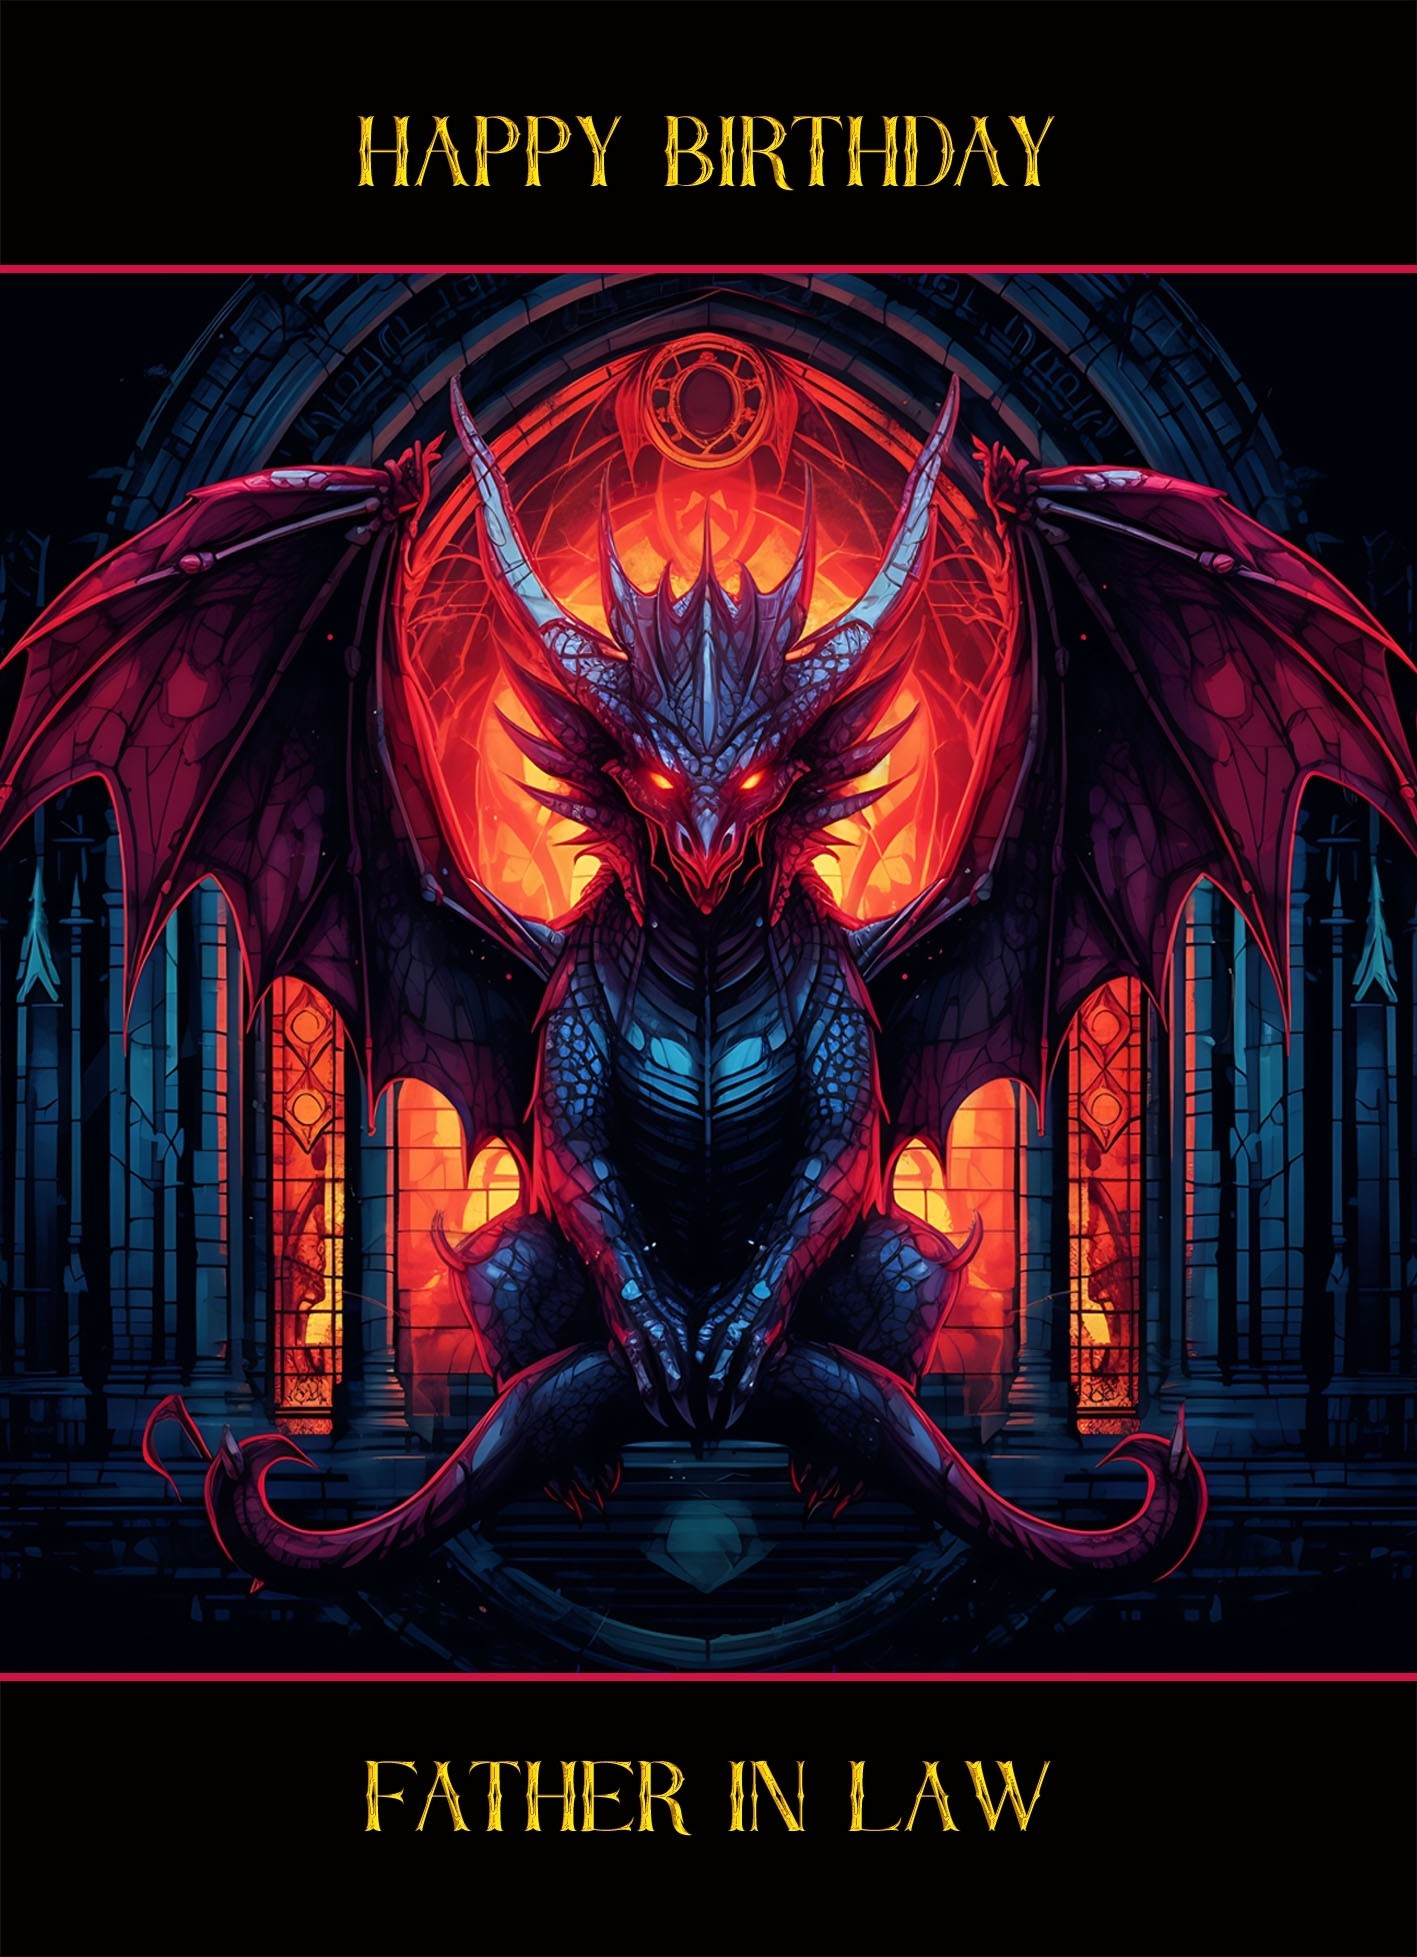 Gothic Fantasy Dragon Birthday Card For Father in Law (Design 3)